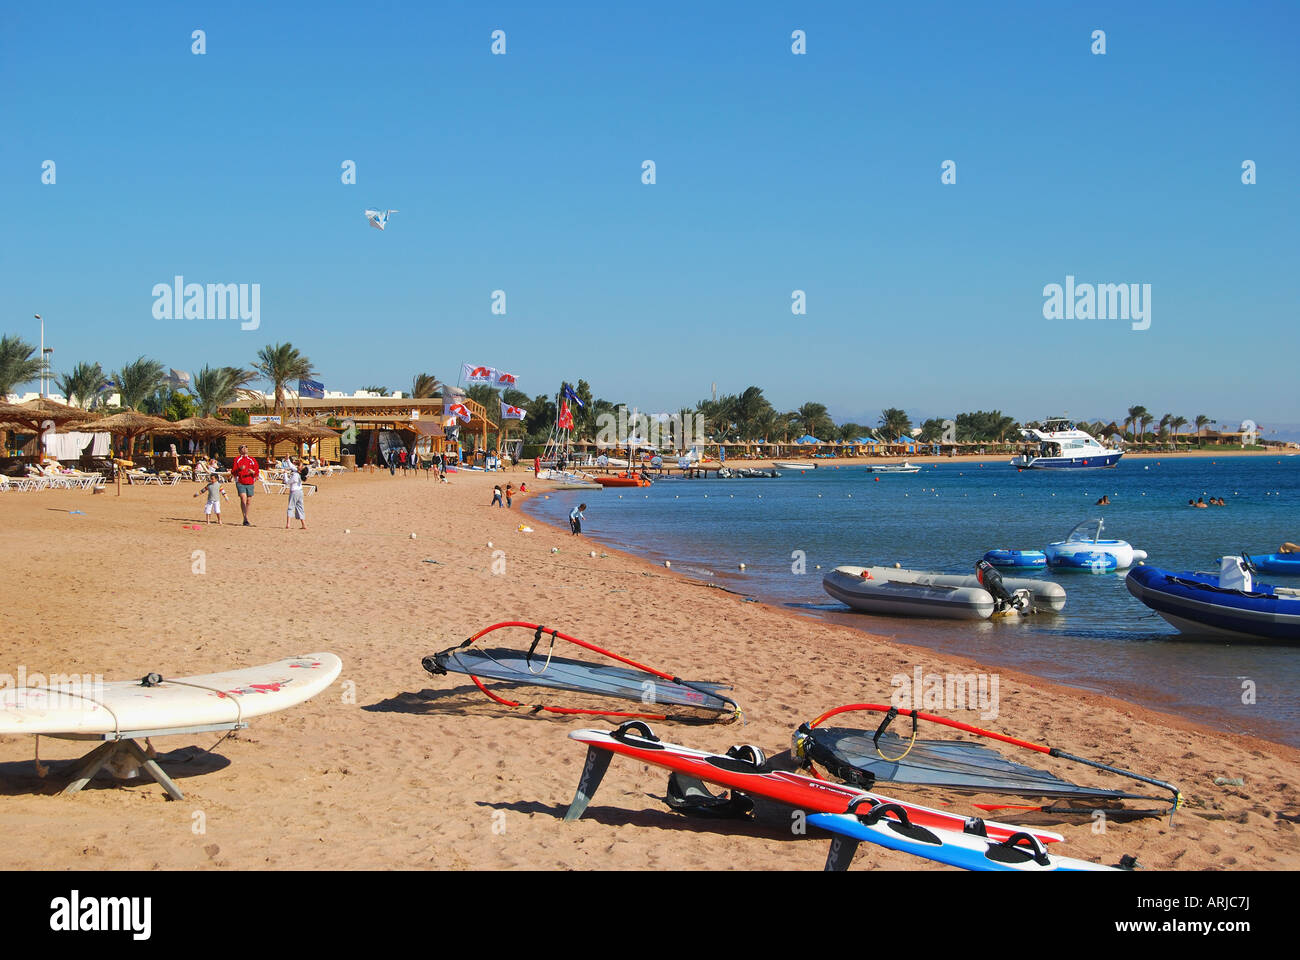 Hilton Resort Hotel beach, Dahab, Sinai Peninsula, Republic of Egypt Stock Photo